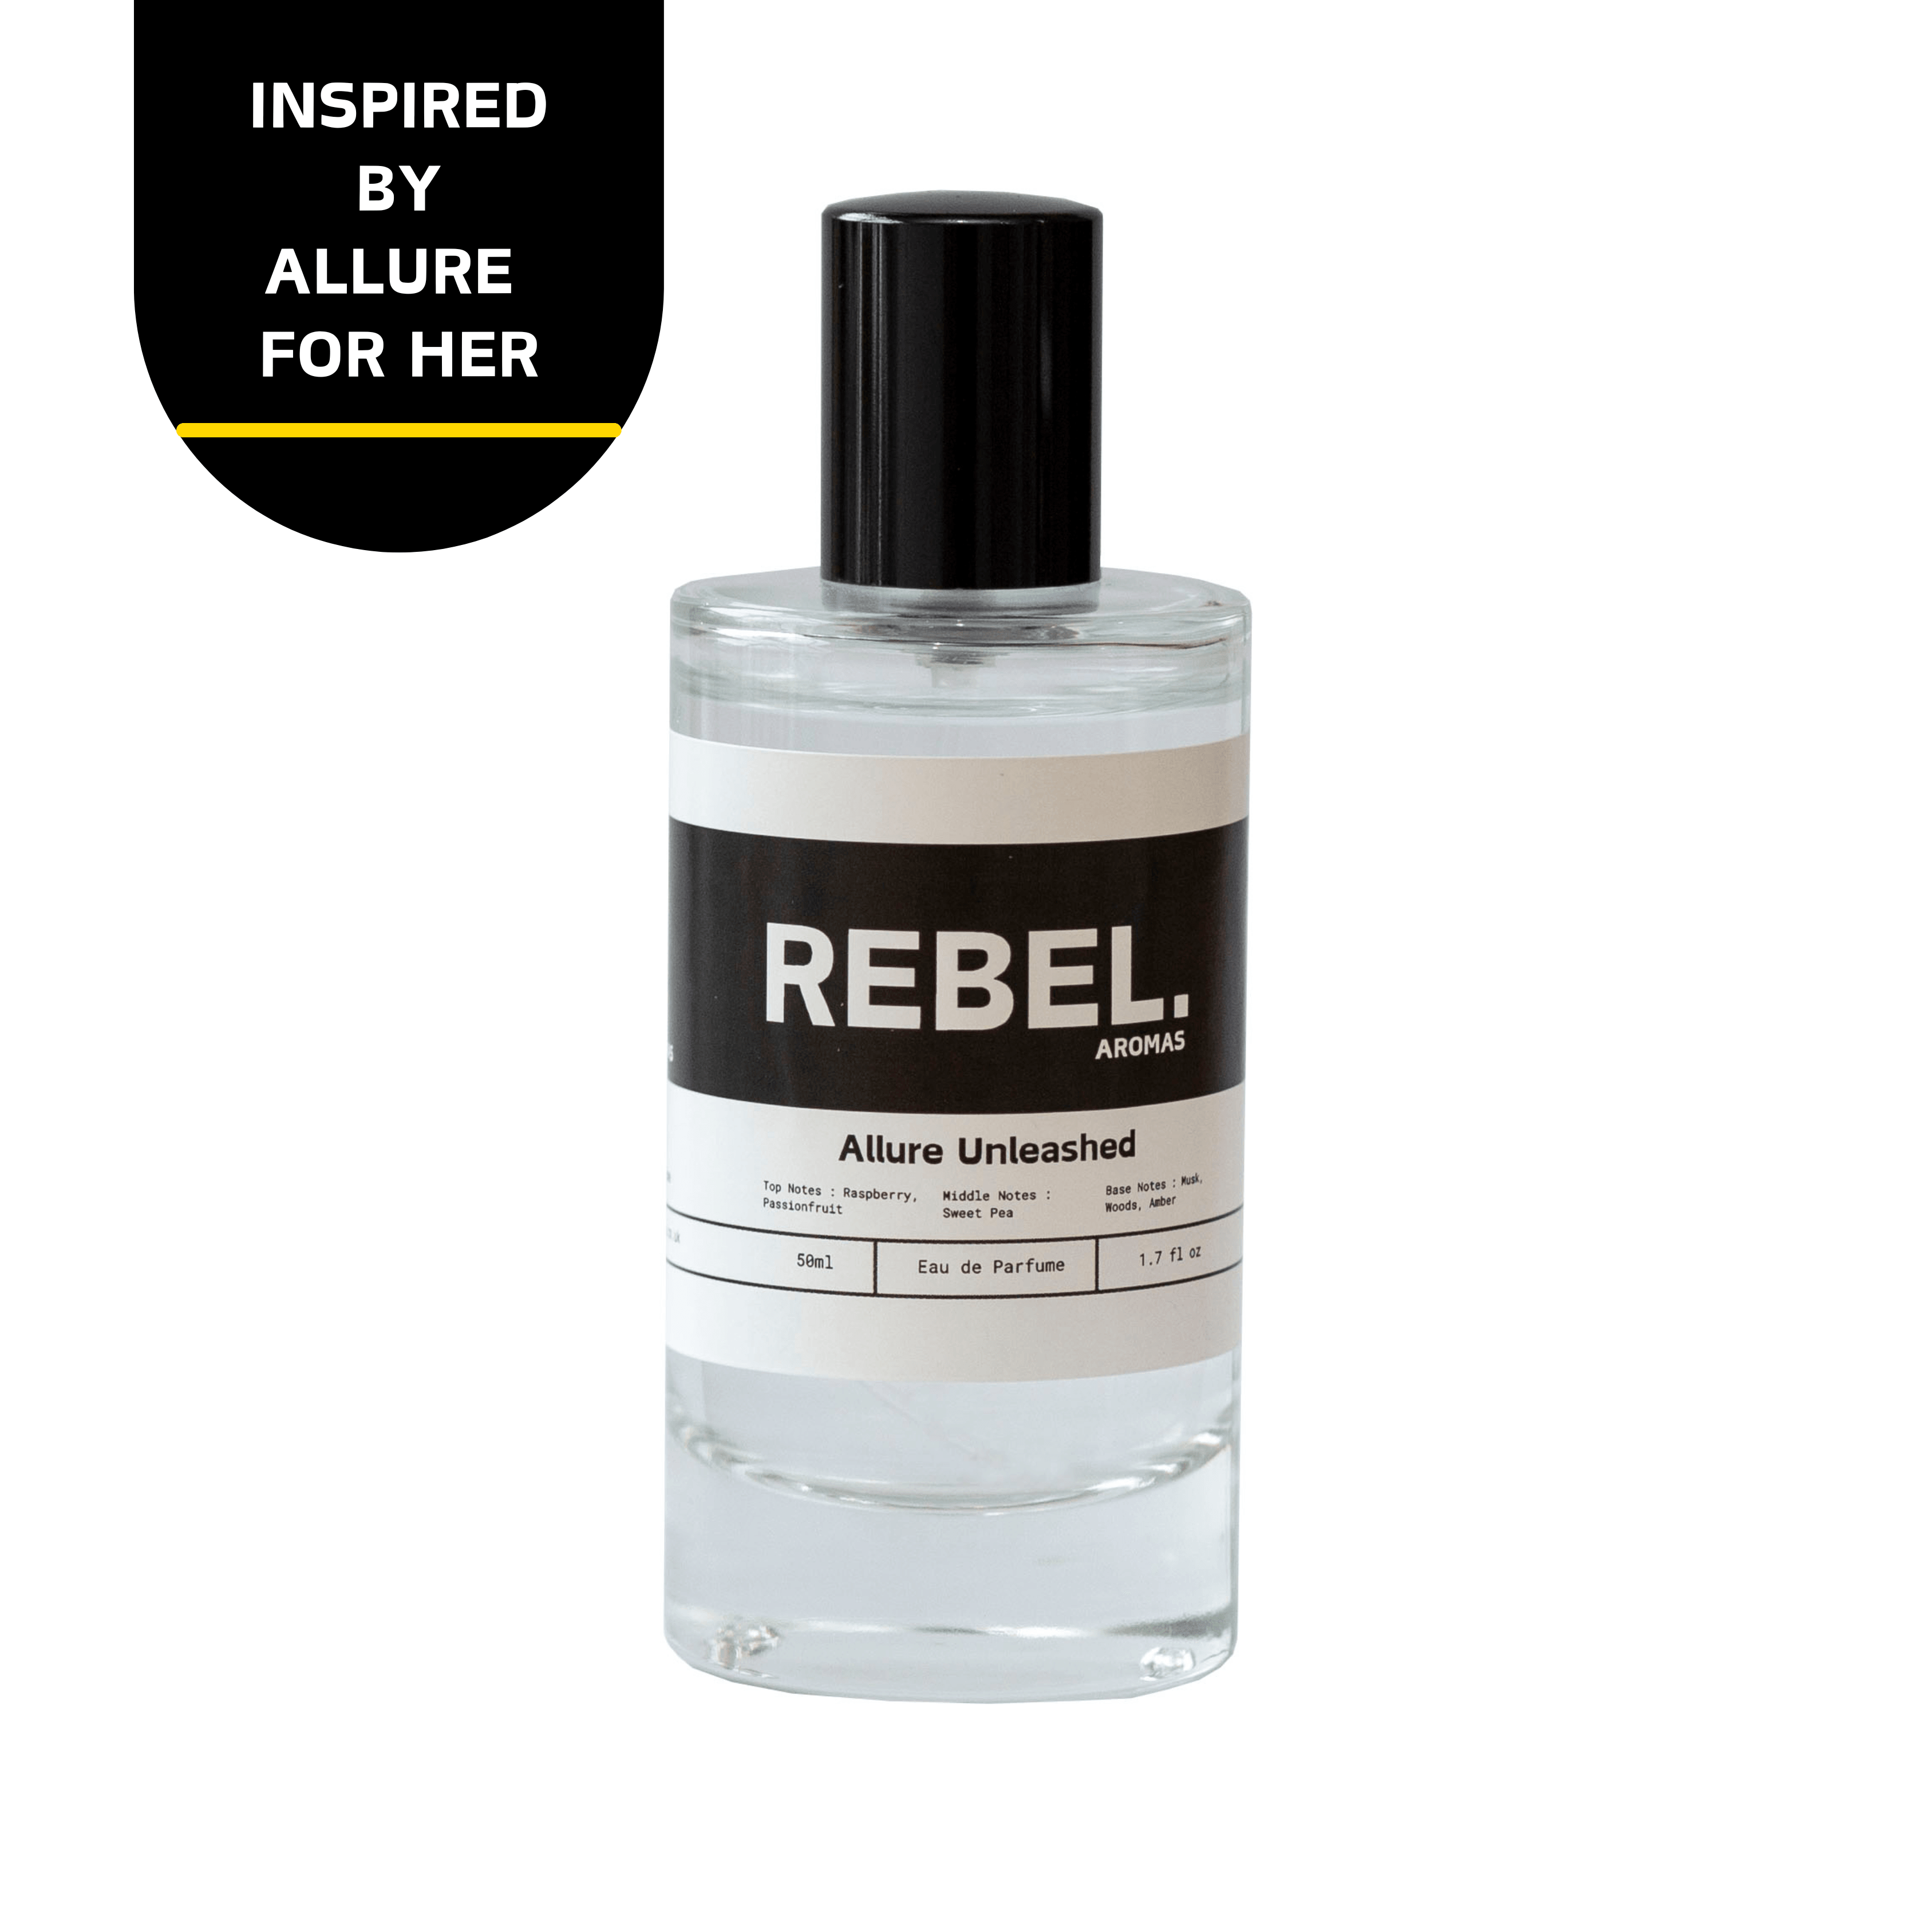 Allure Unleashed - Rebel Aromas